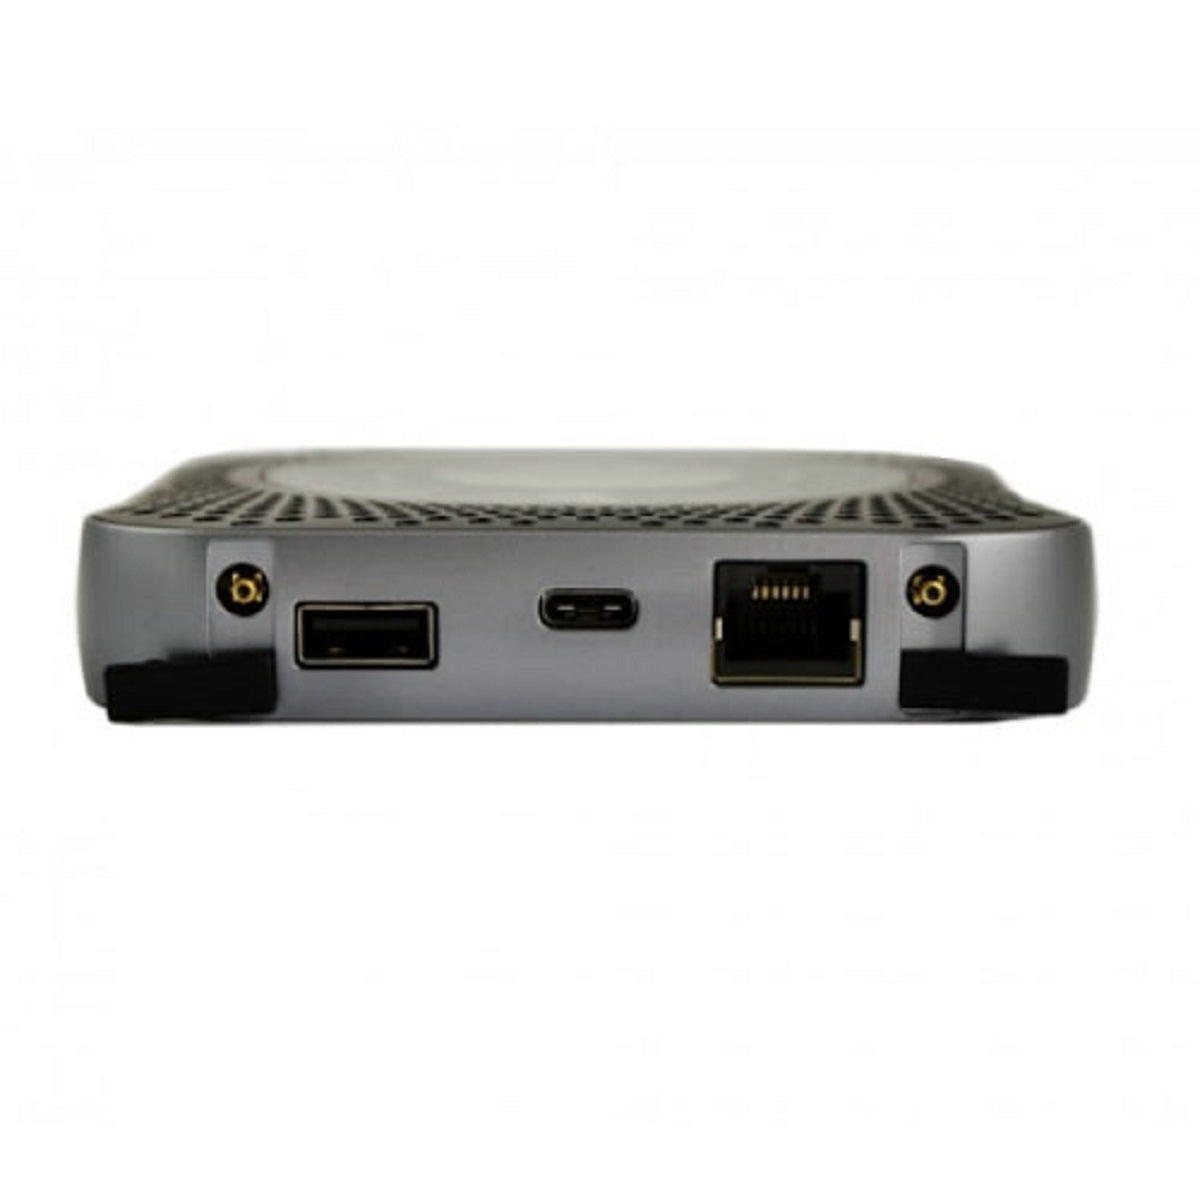 NETGEAR MR1100 Nighthawk M1 Portable WiFi 5 3G/4G LTE Cat 16 Router